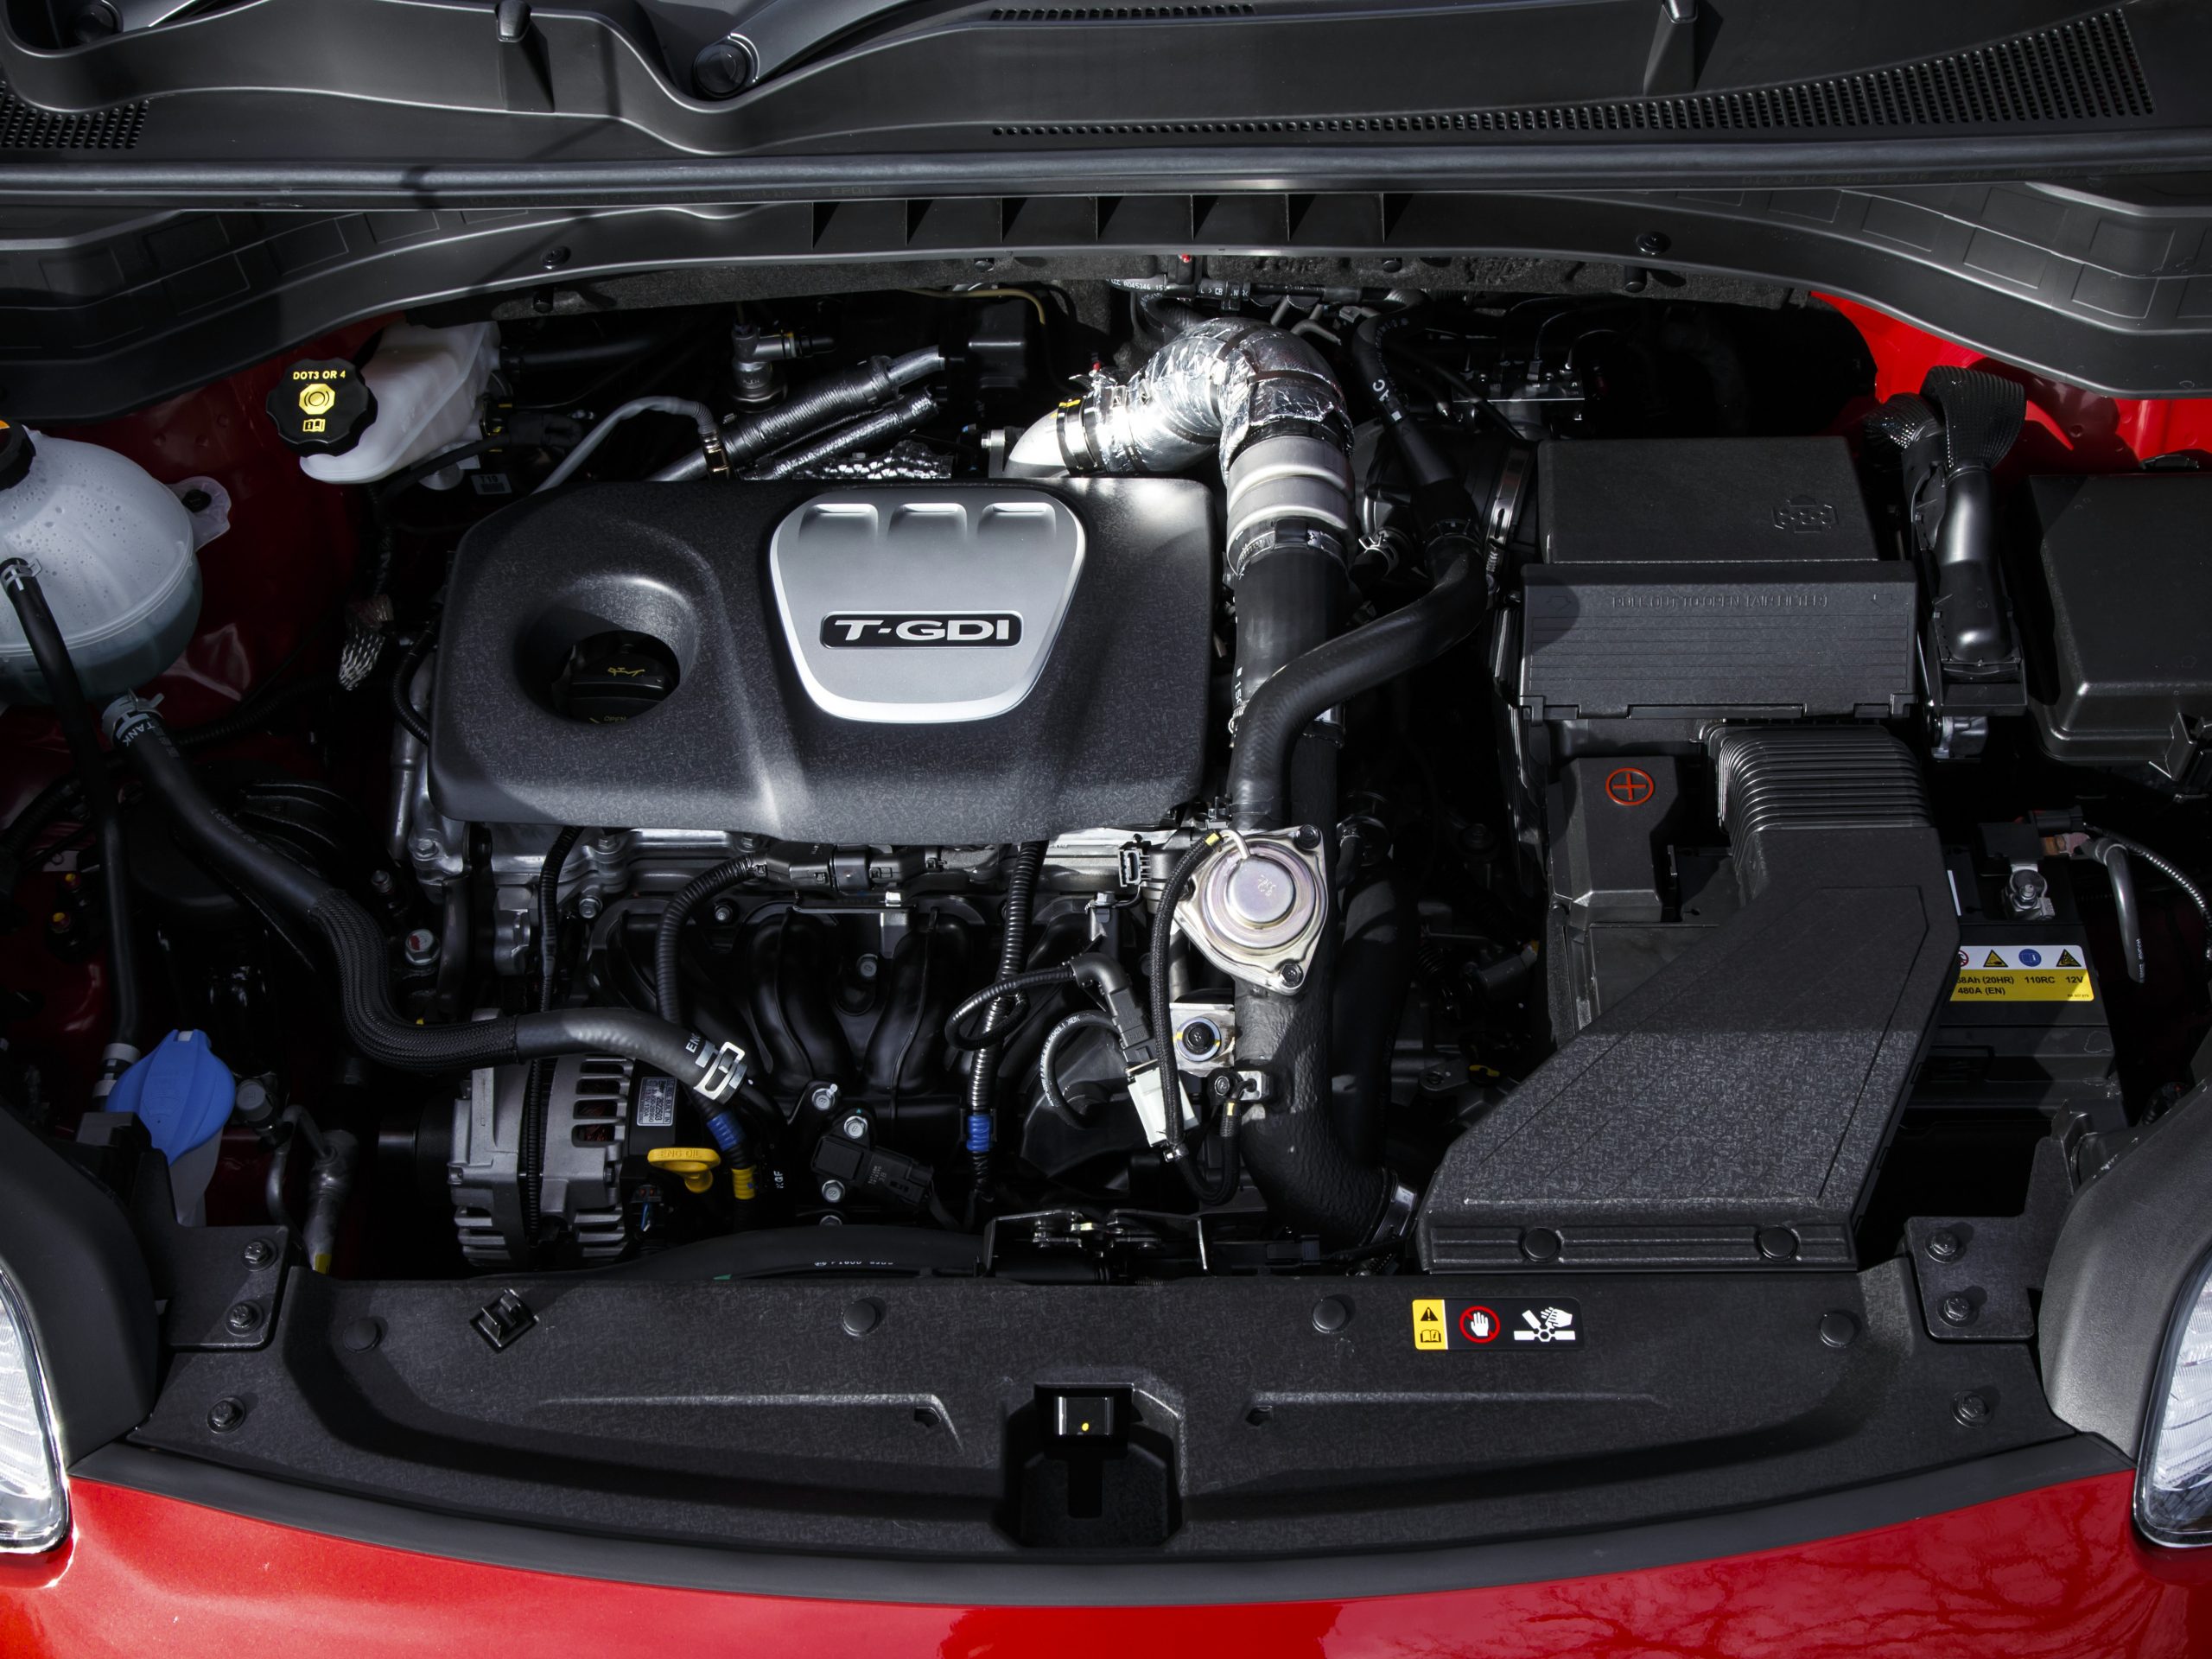 Ремонт двигателя киа спортейдж бензин. Двигатель Киа Спортейдж 3. Kia Sportage 3 моторы. Двигатель Киа соул 1.6 дизель. Киа Спортейдж 2015 двигатель.